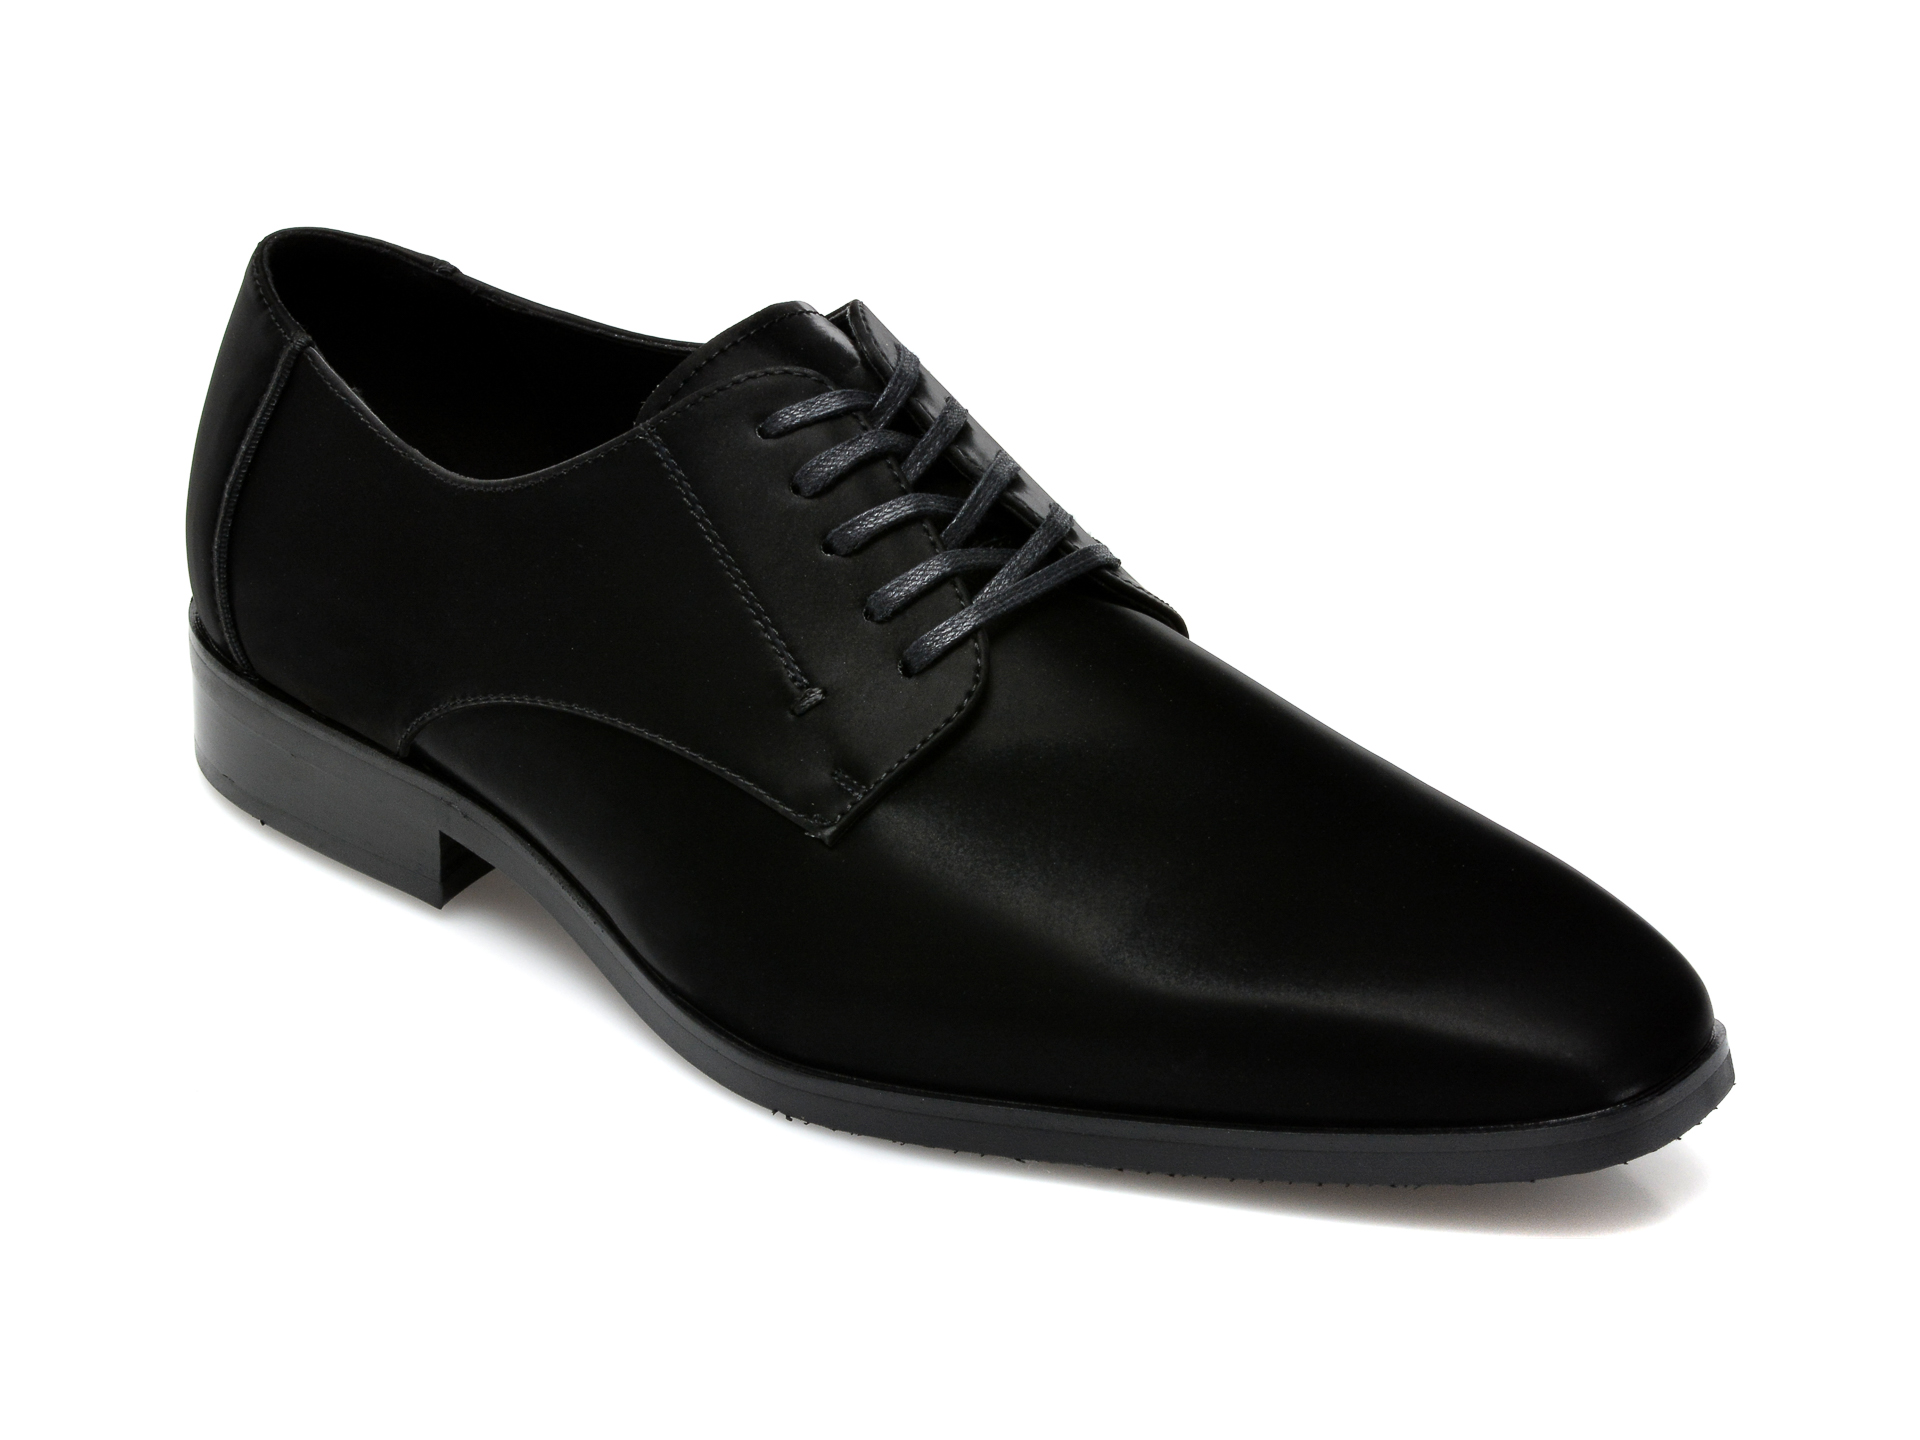 Pantofi ALDO negri, Montecassino004, din piele ecologica imagine otter.ro 2021